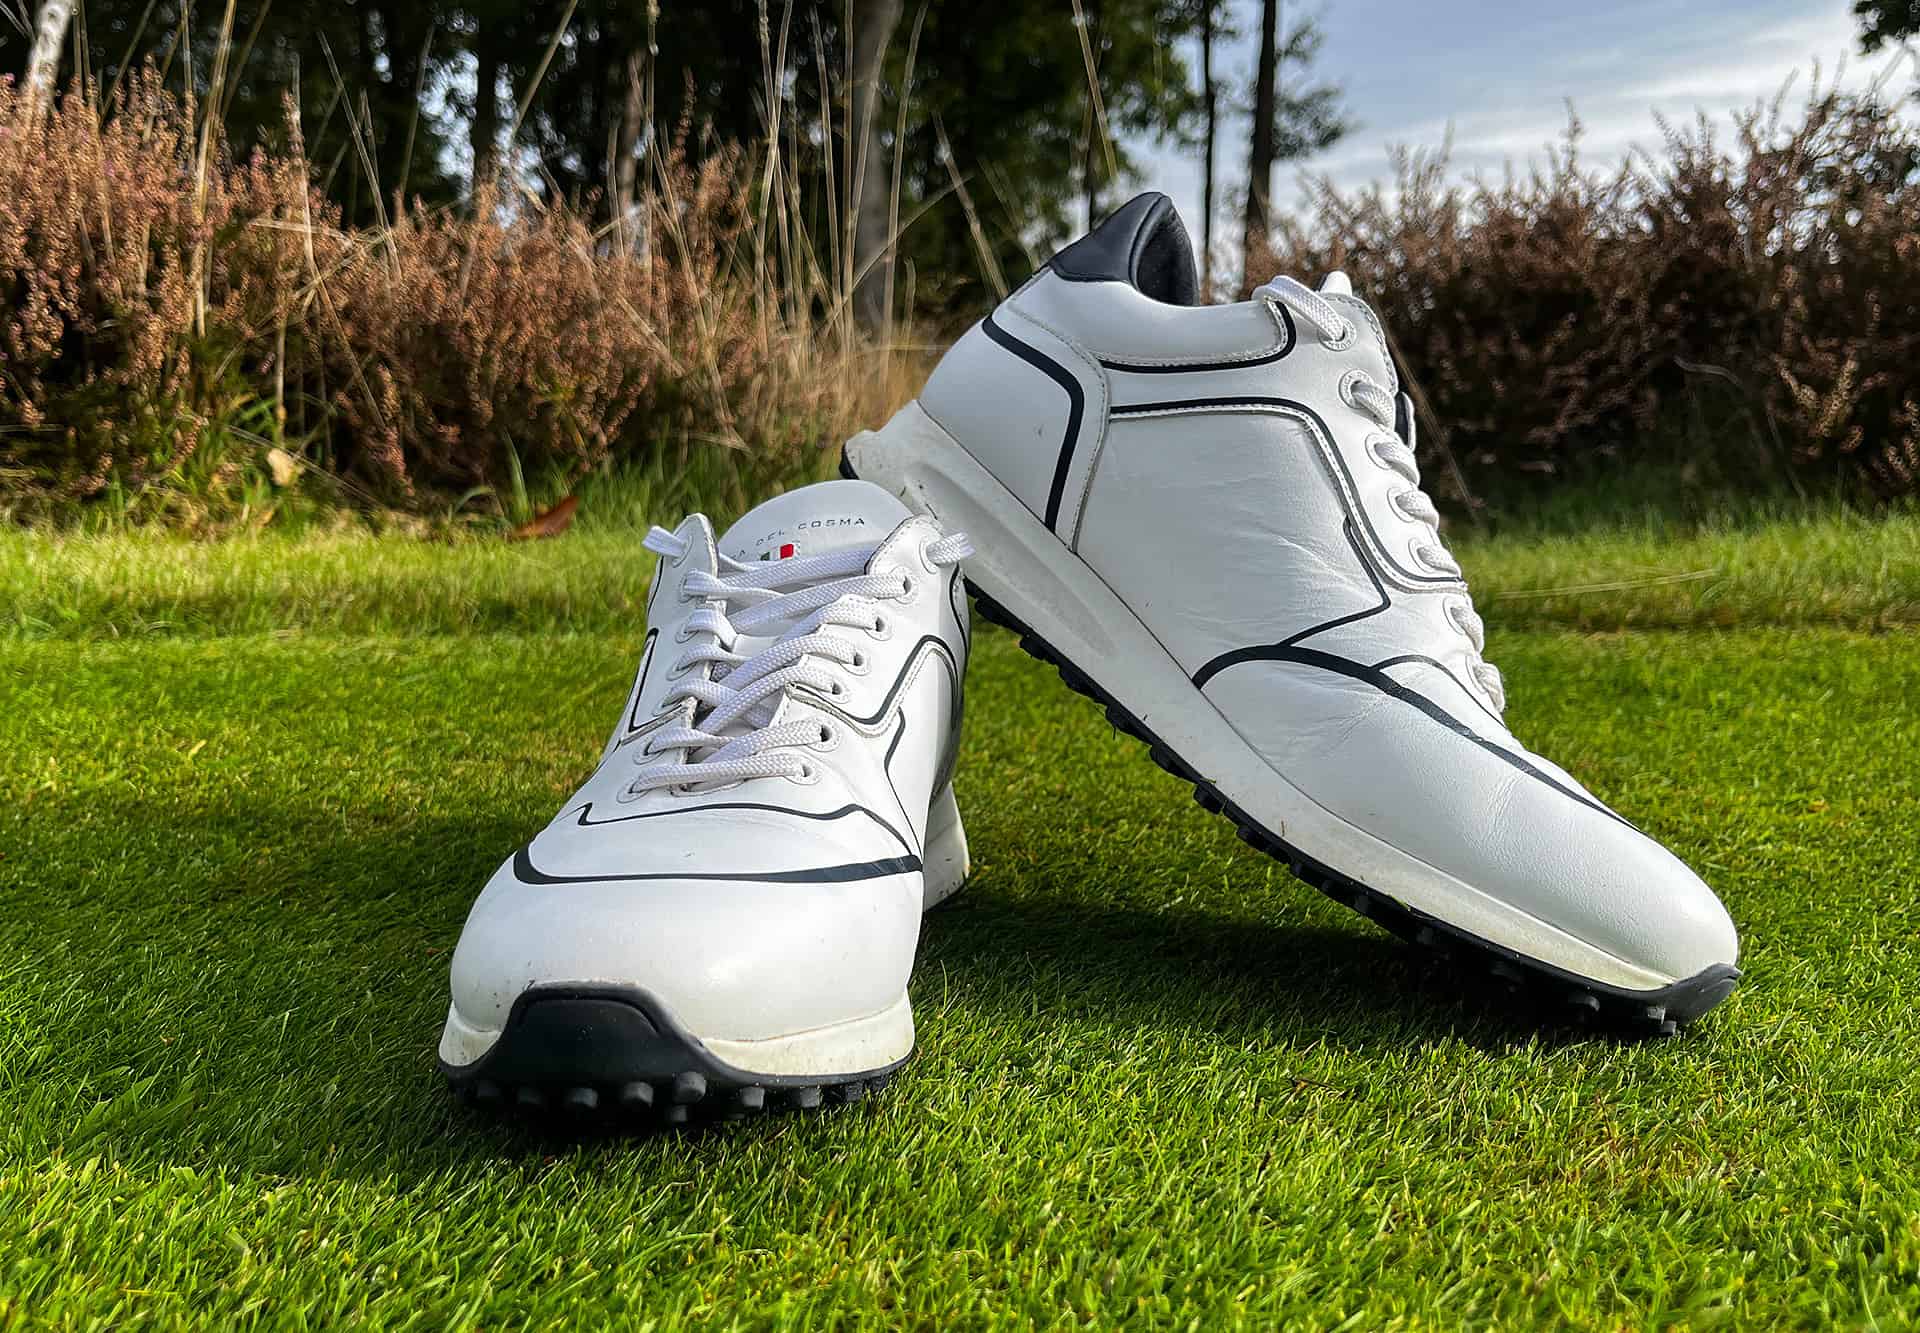 Duca Del Cosma Flyer golf shoes review